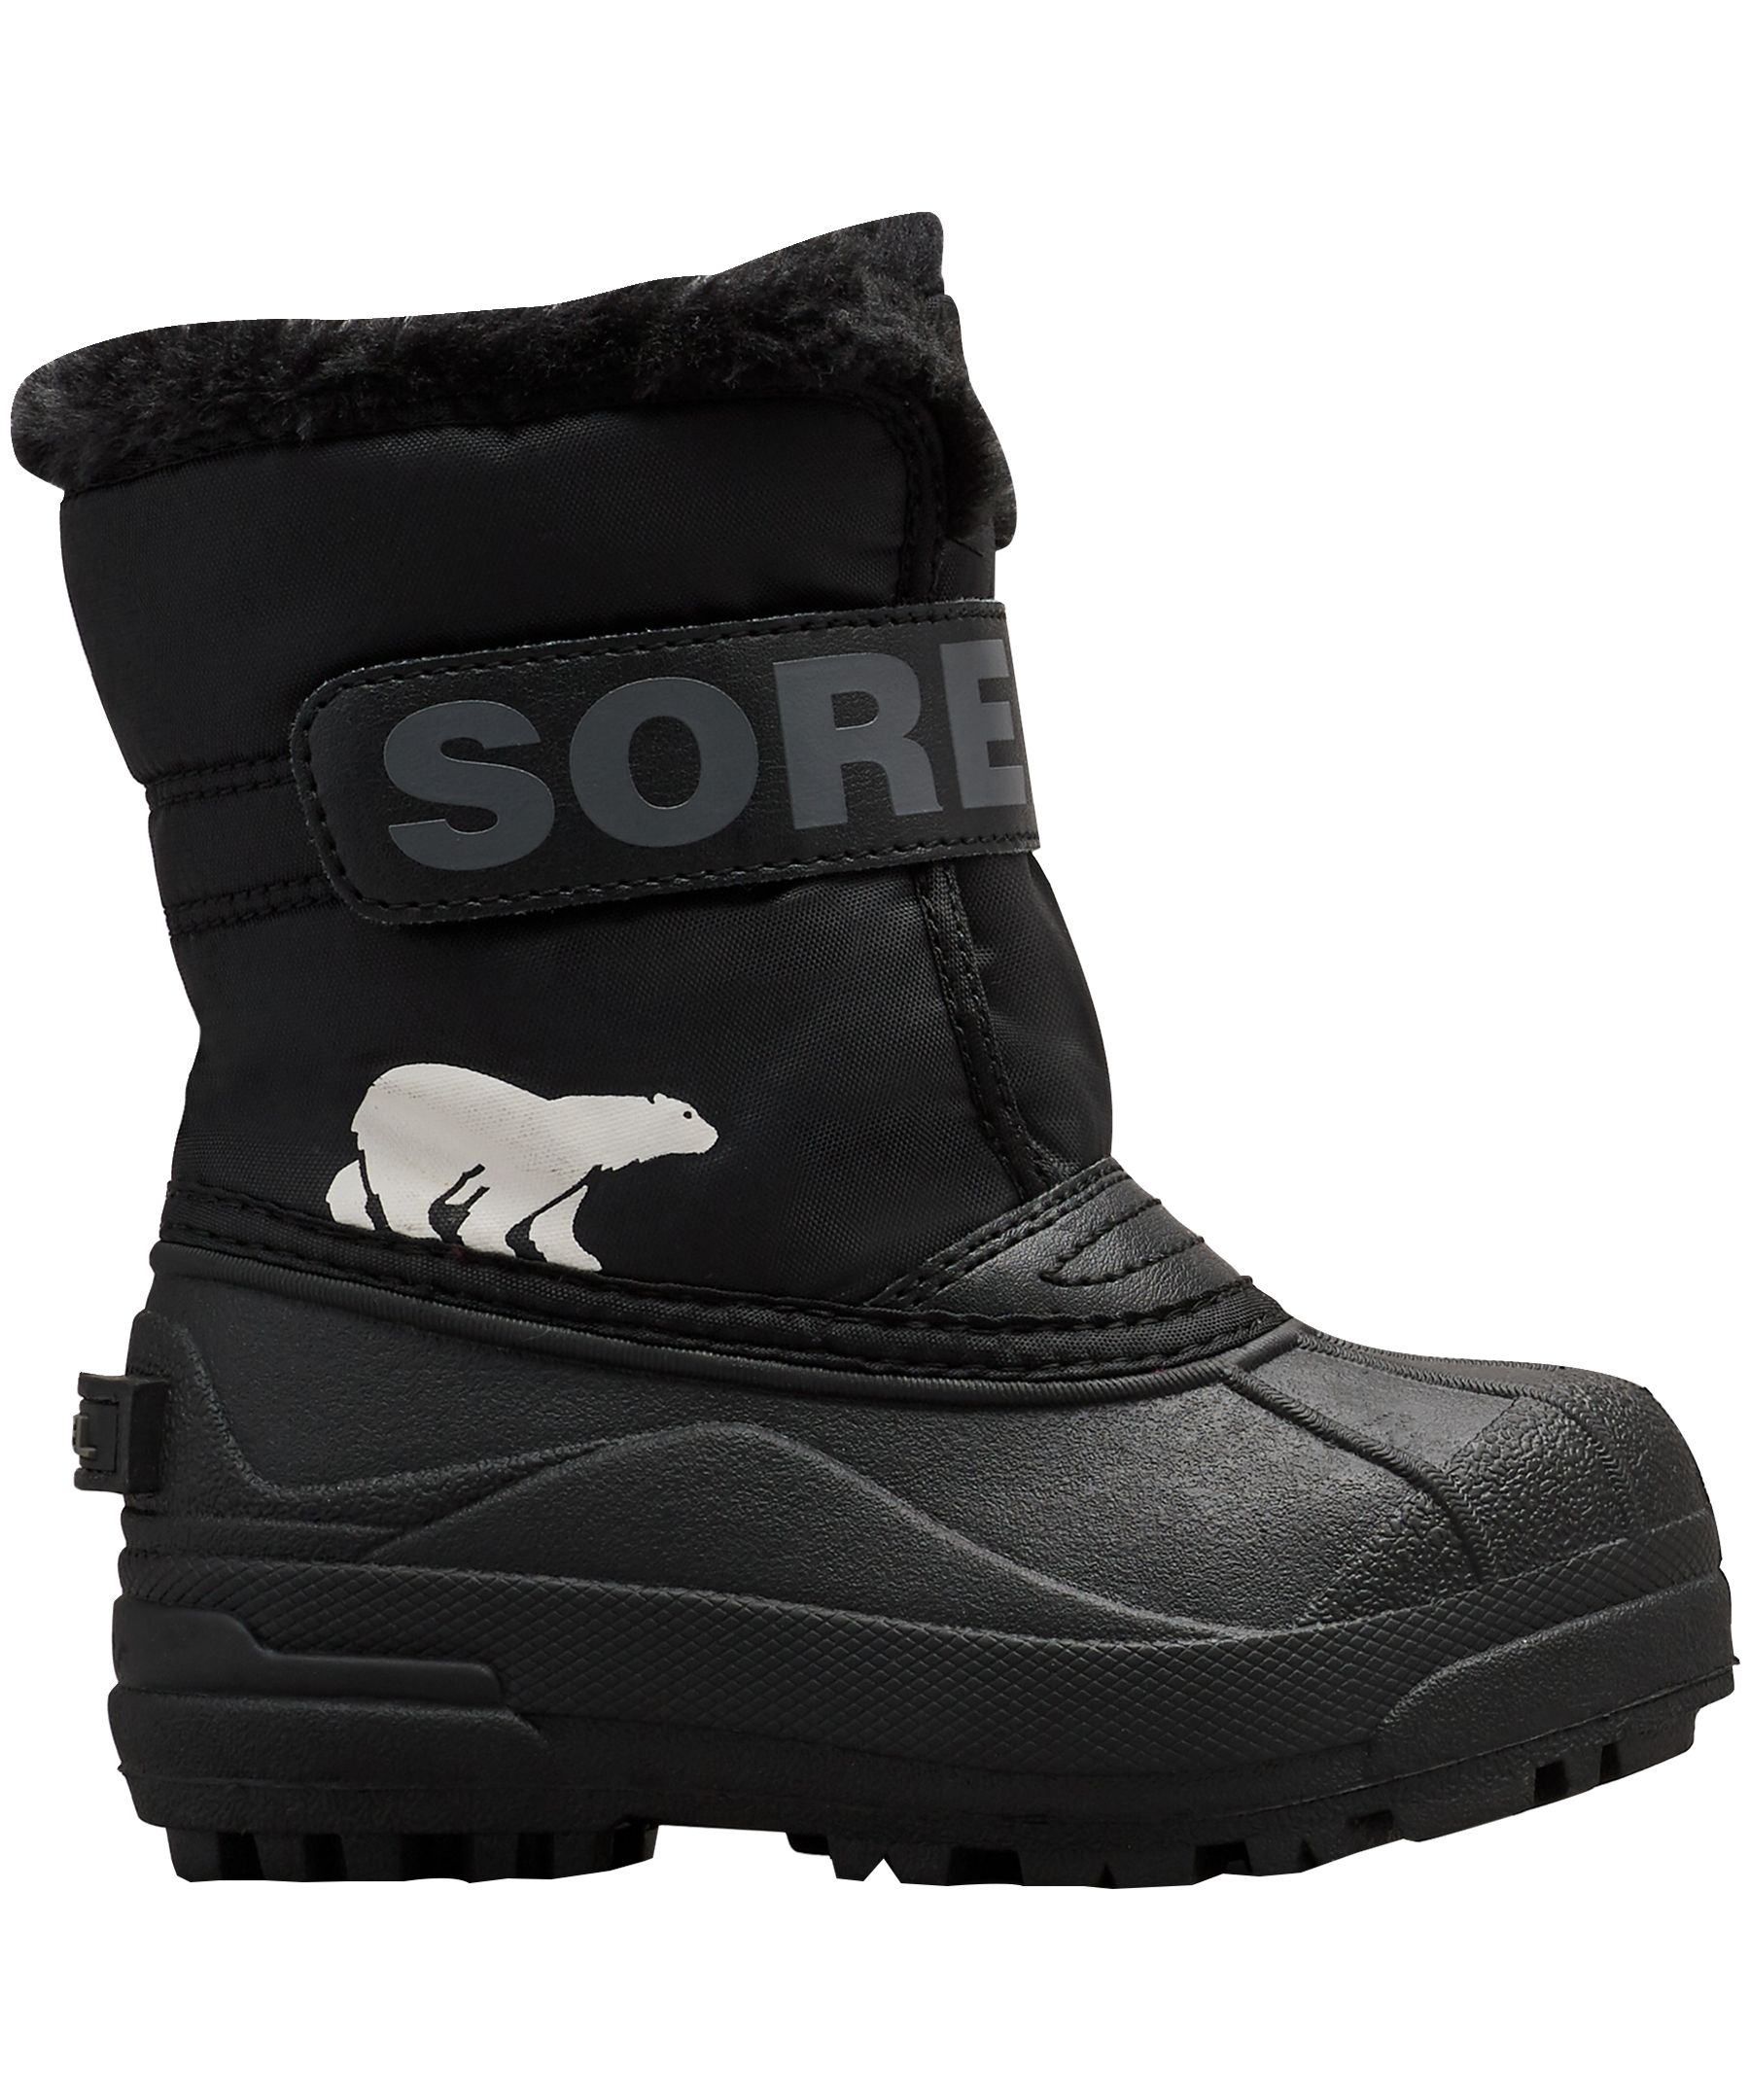 Waterproof winter boots - Black - Kids